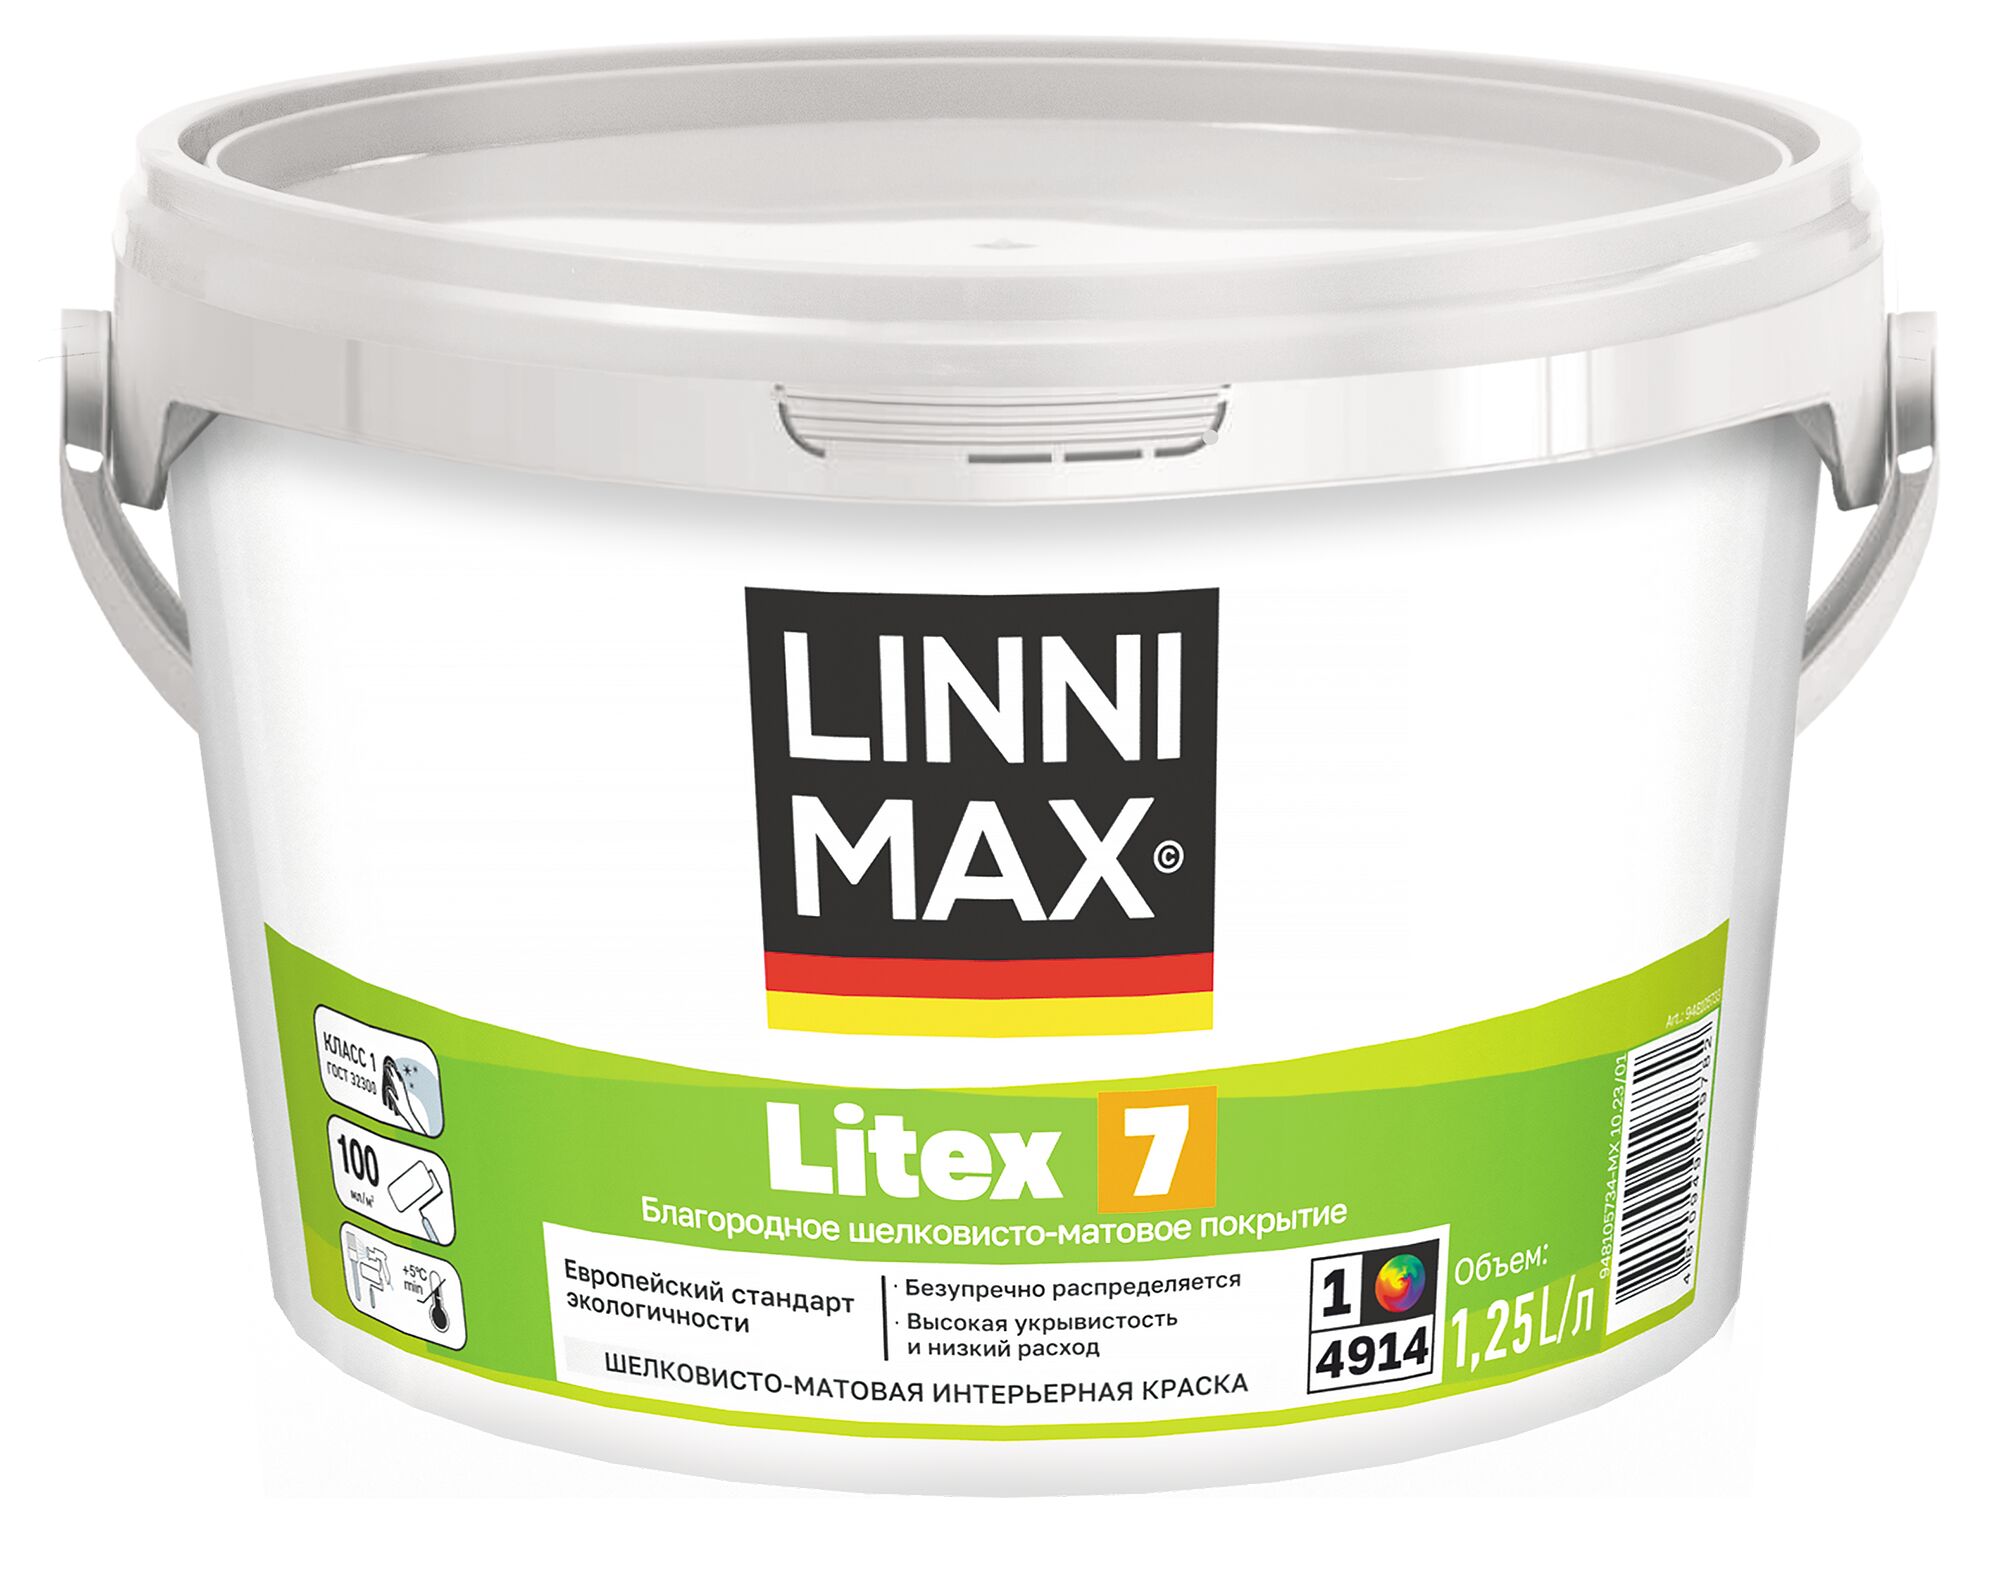 Litex 7 1,25л Краска водно-дисперсионная для внутренних работ База1 LINNIMAX, Litex 7 1,25л Краска водно-дисперсионная для внутренних работ База1 LINNIMAX